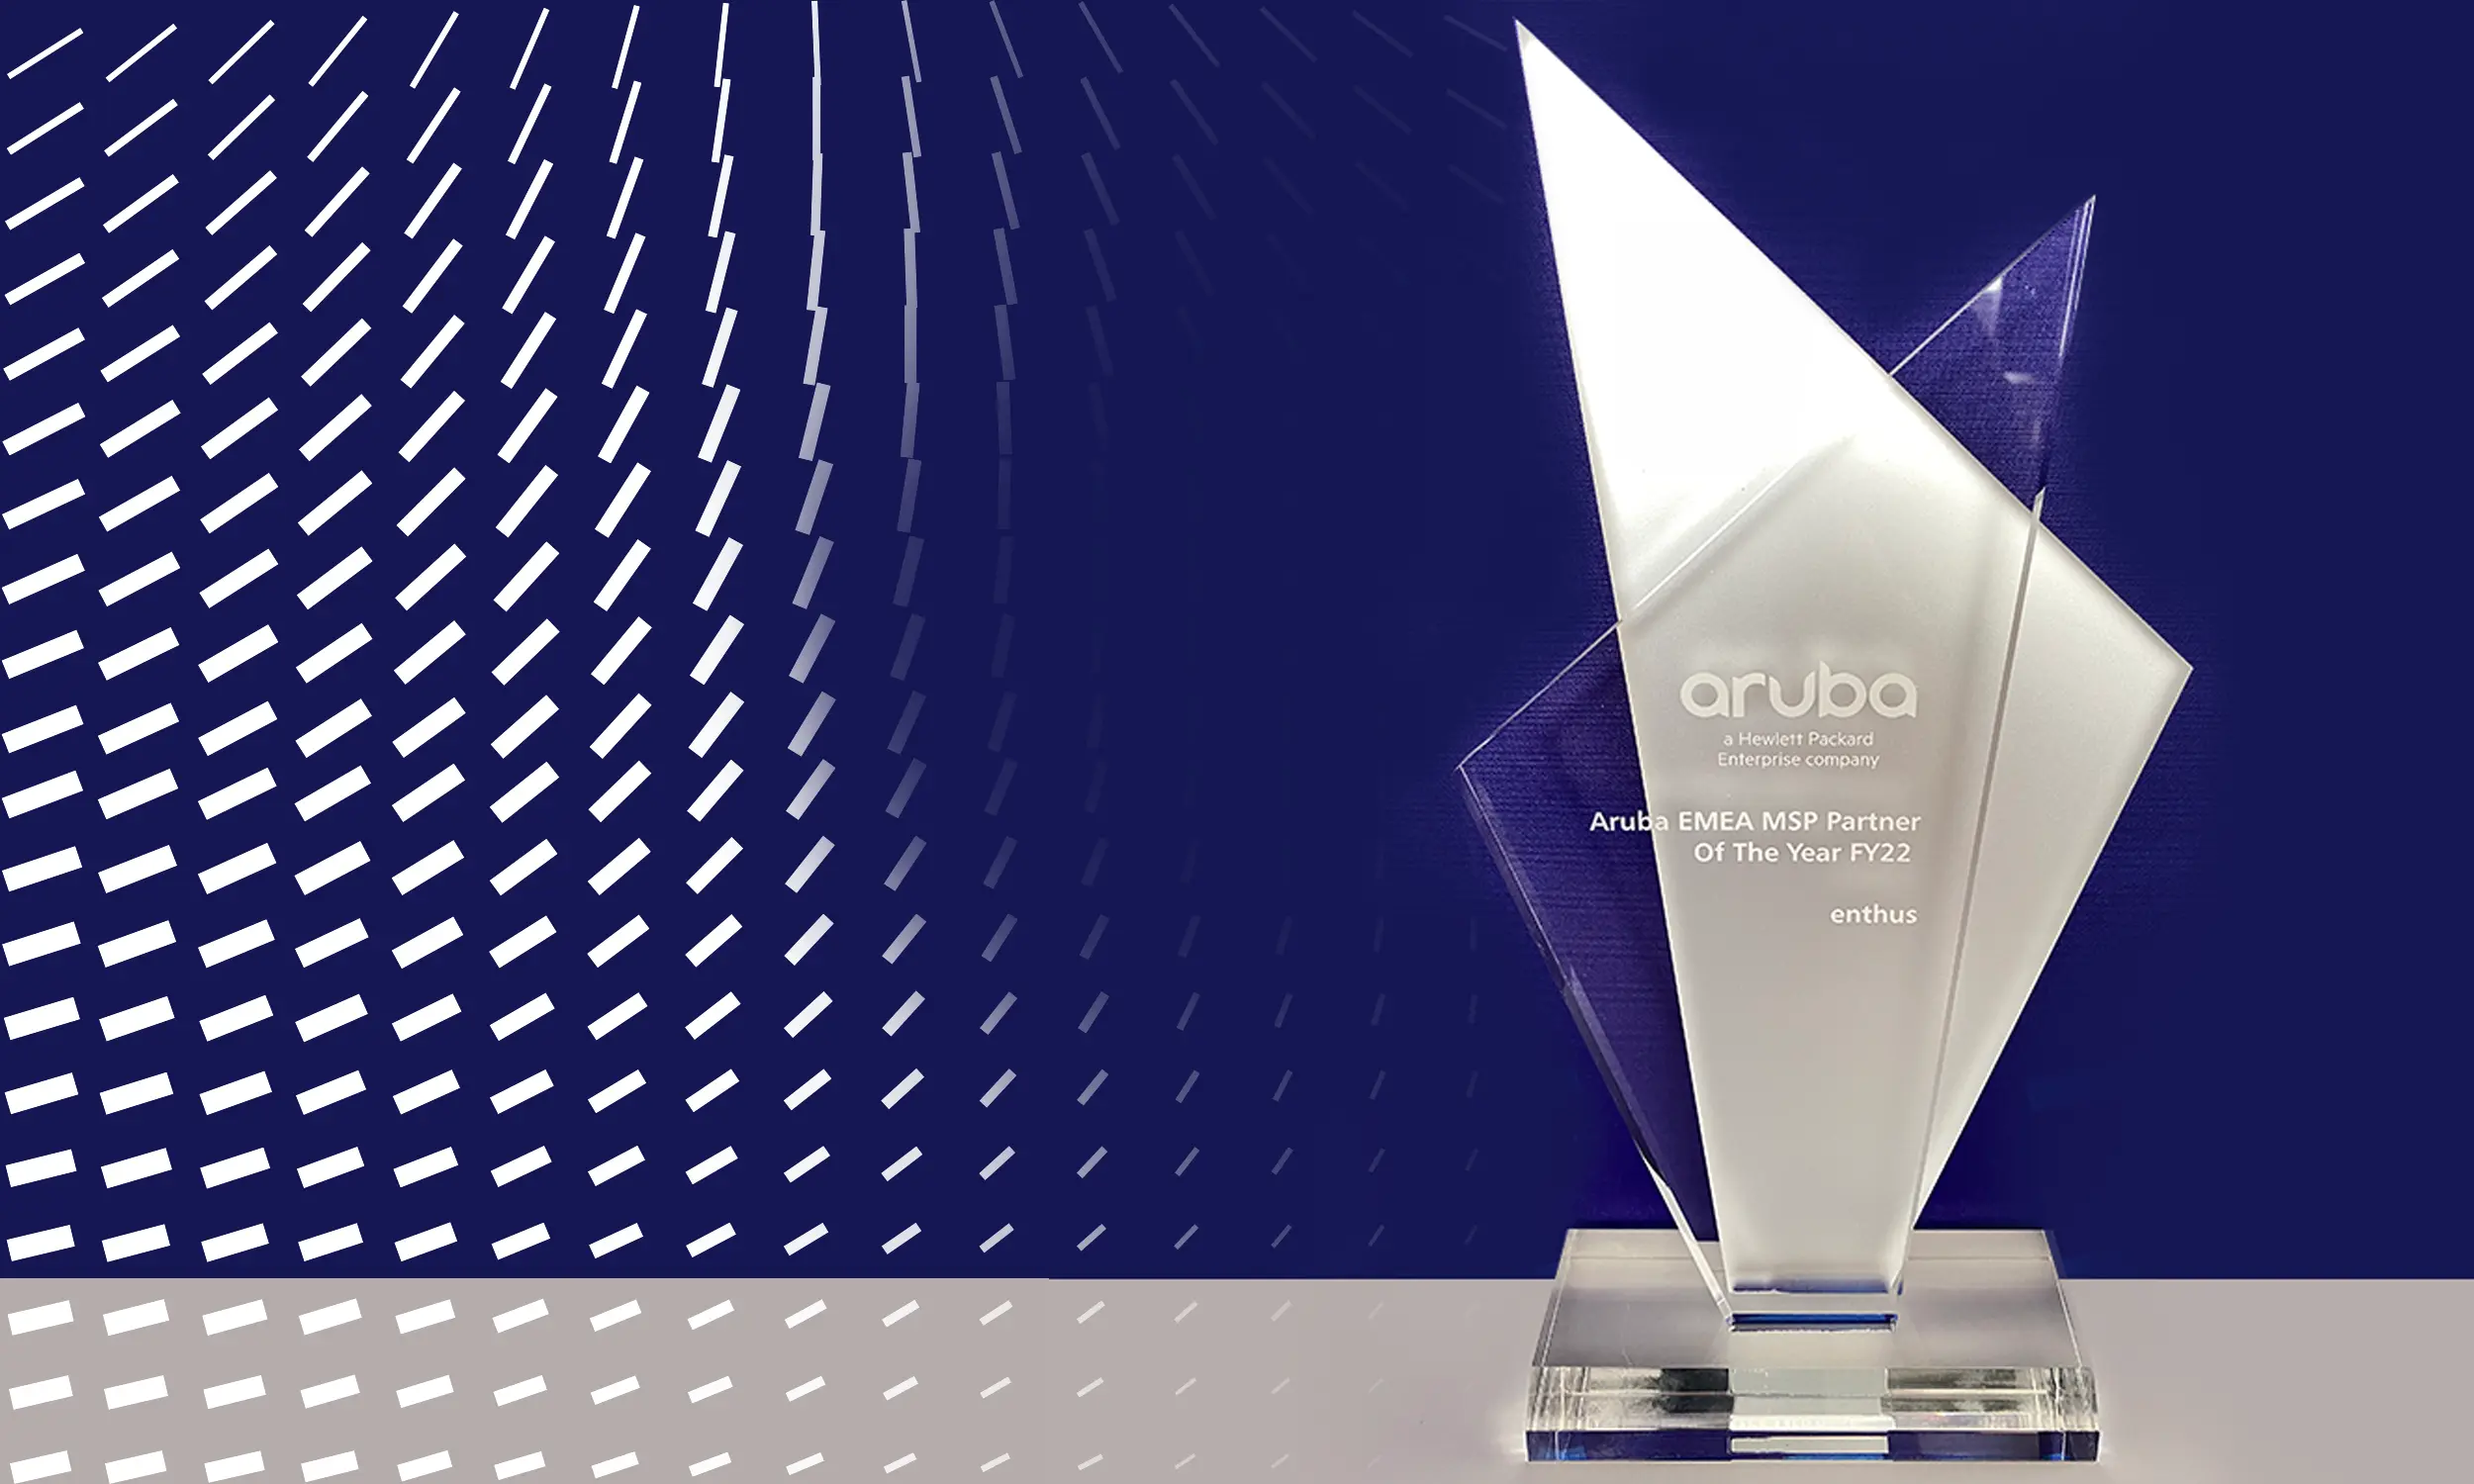 Branchen-Award für enthus: Wir sind Aruba EMEA MSP Partner of the Year 2022